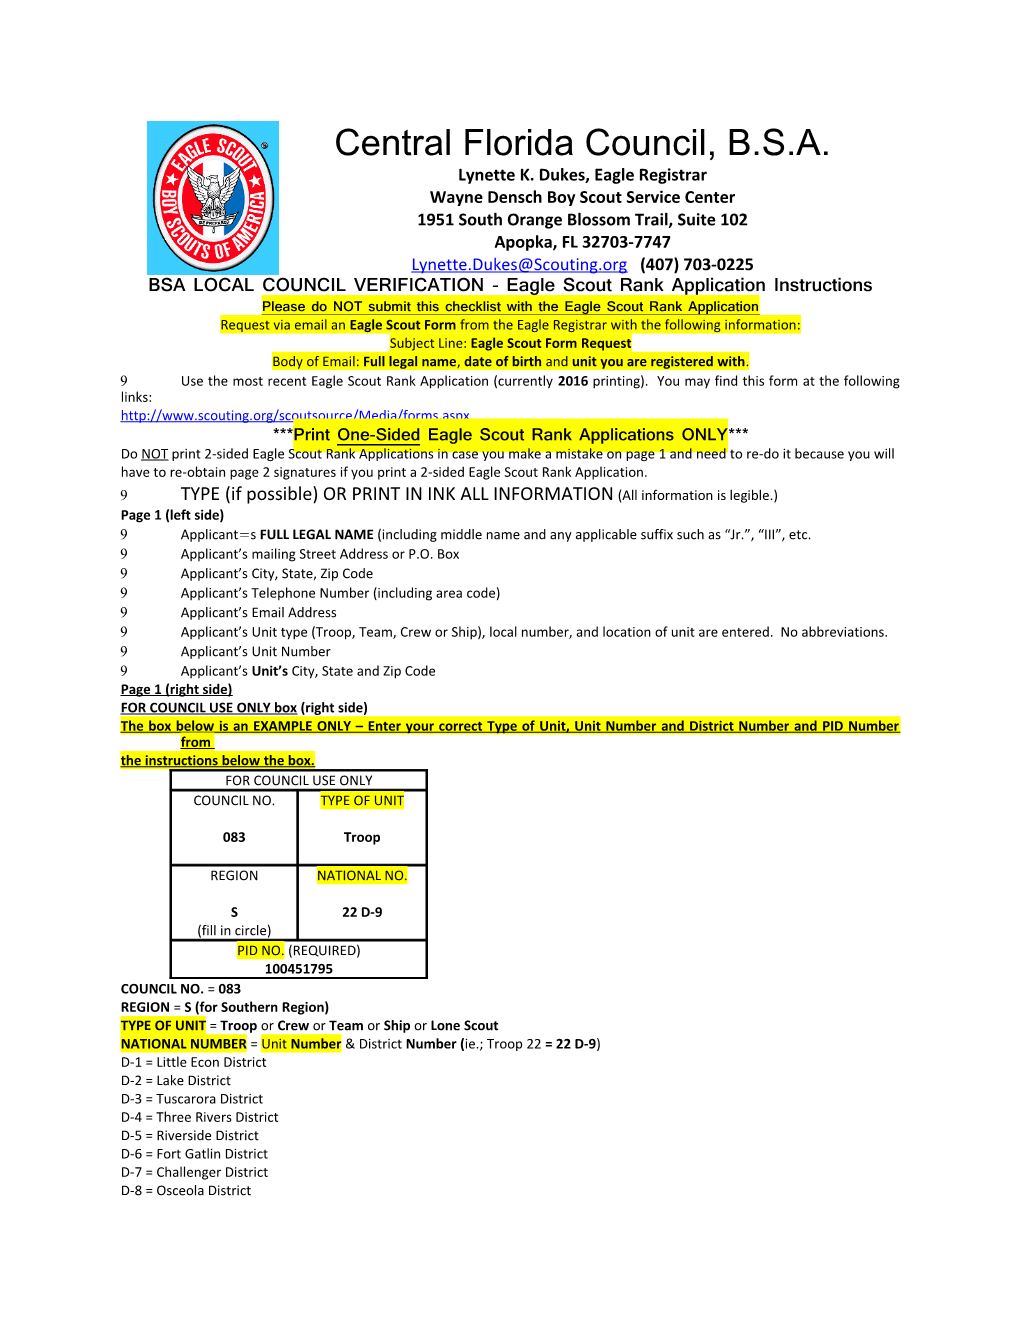 BSA LOCAL COUNCIL VERIFICATION - Eagle Scout Rank Application Instructions